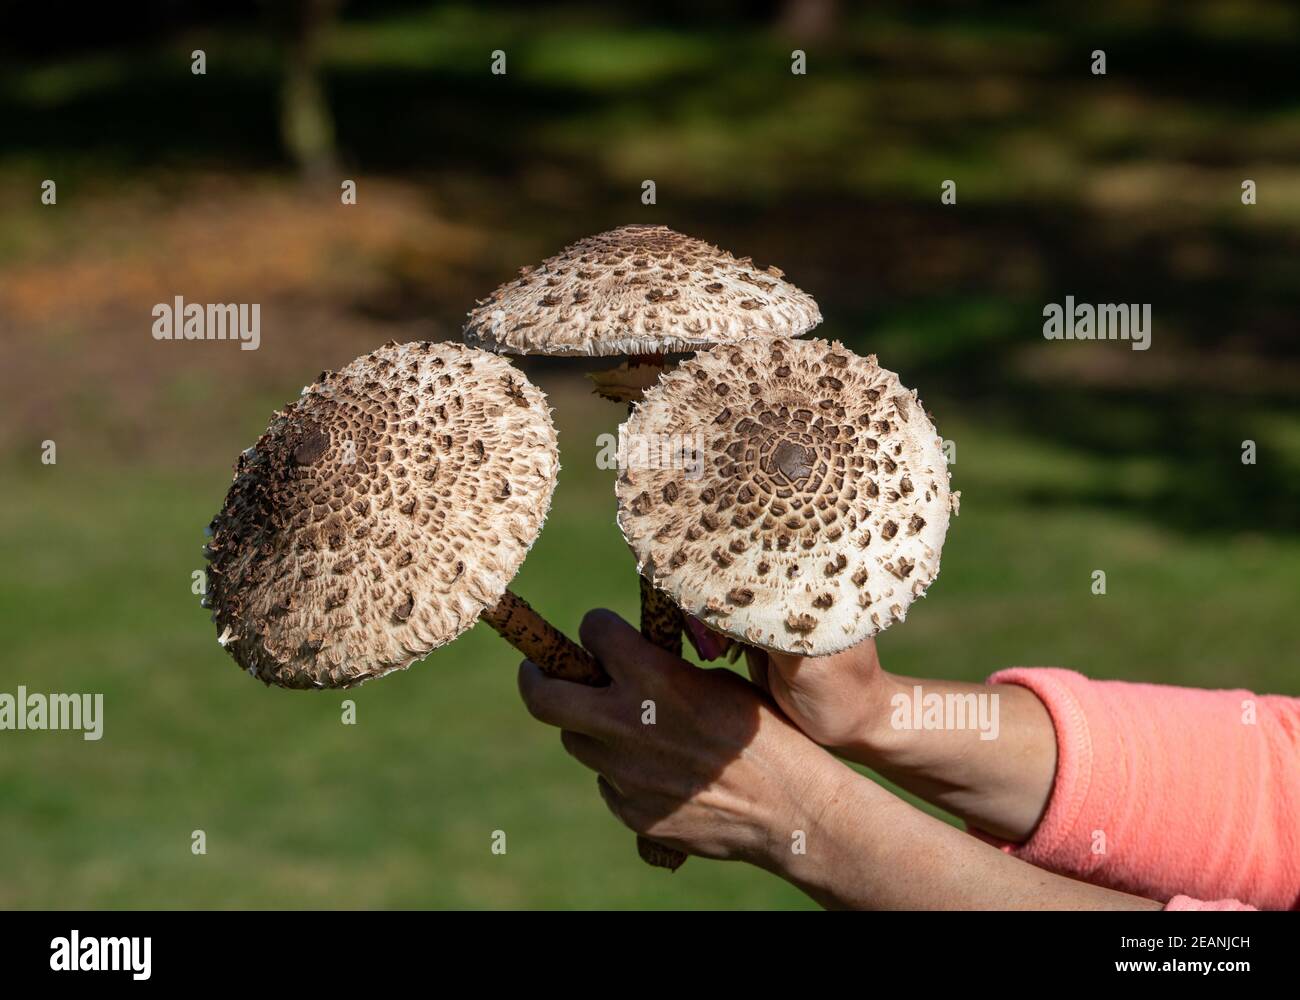 Ripe parasol mushroom in the mushroom picker's hand Stock Photo